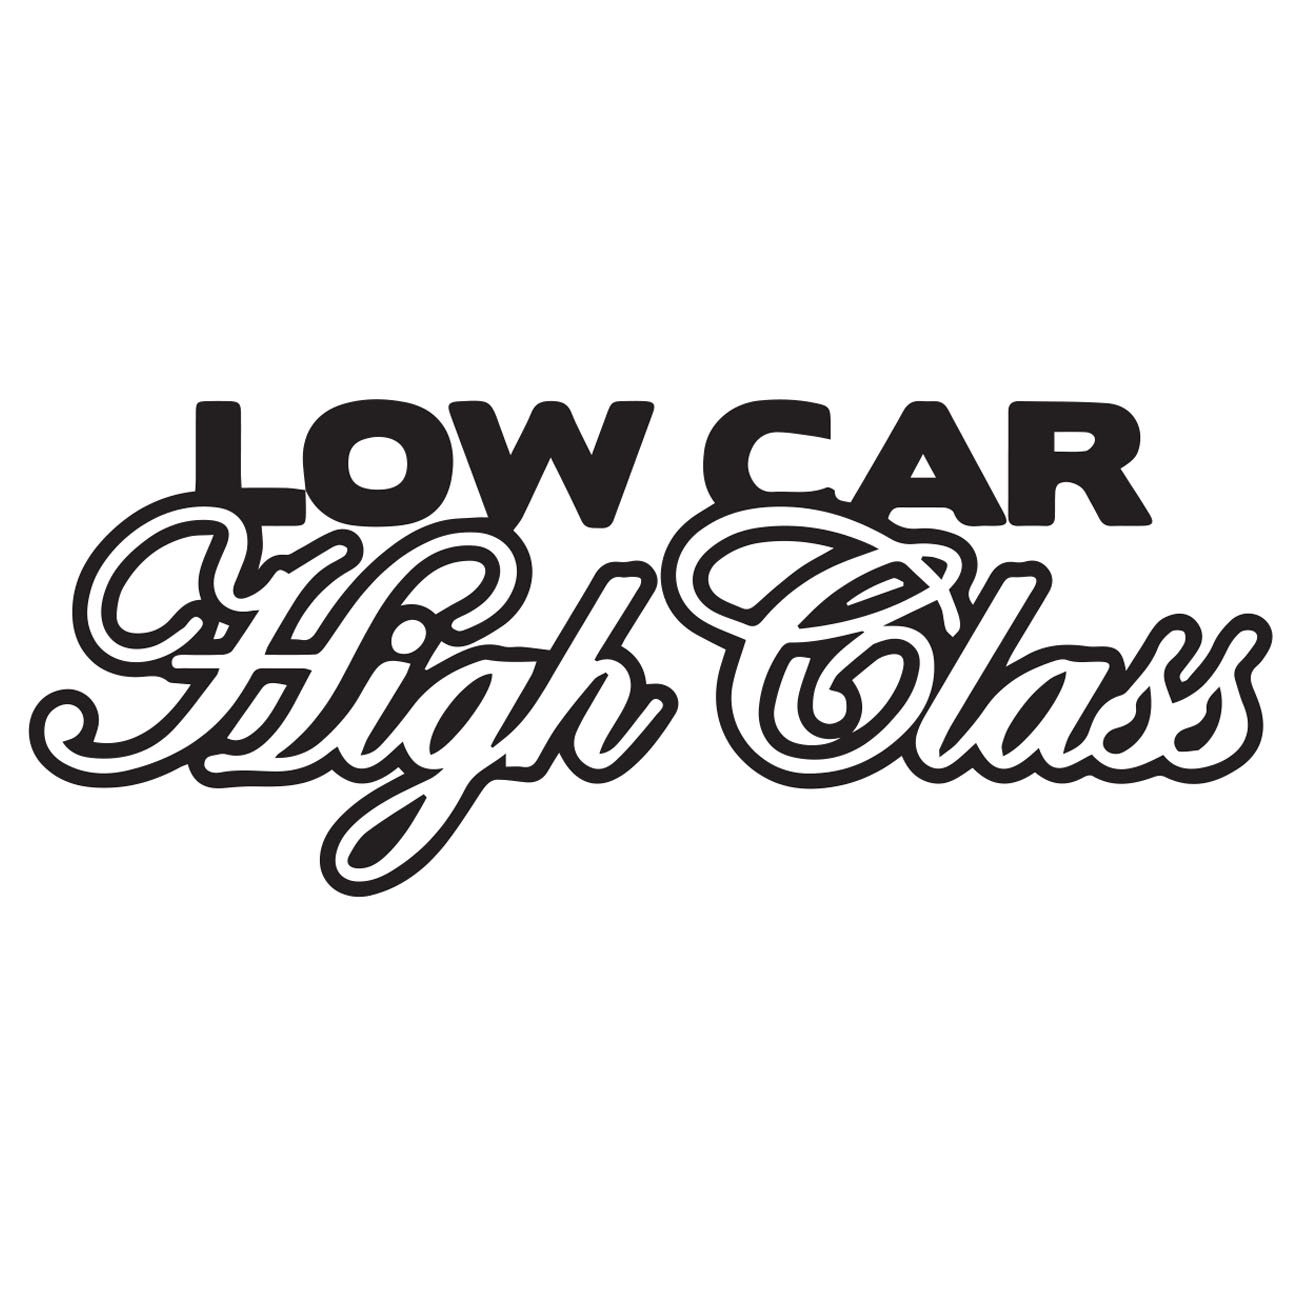 Low car high class